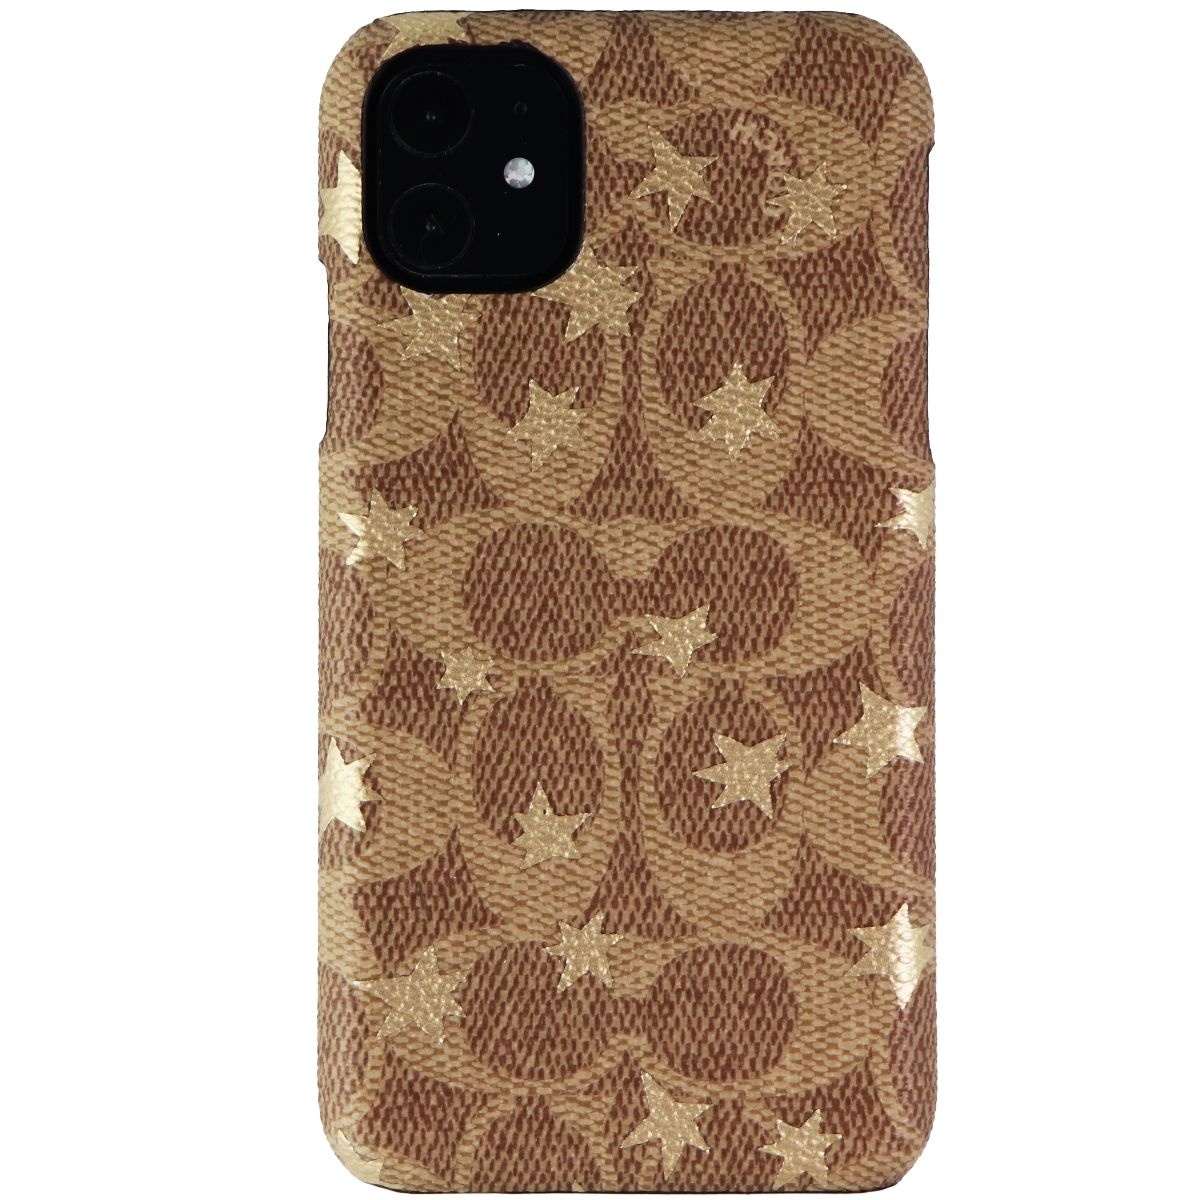 Coach Slim Wrap Case for Apple iPhone 11 Smartphones - Khaki / Gold Foil Stars - image 2 of 2